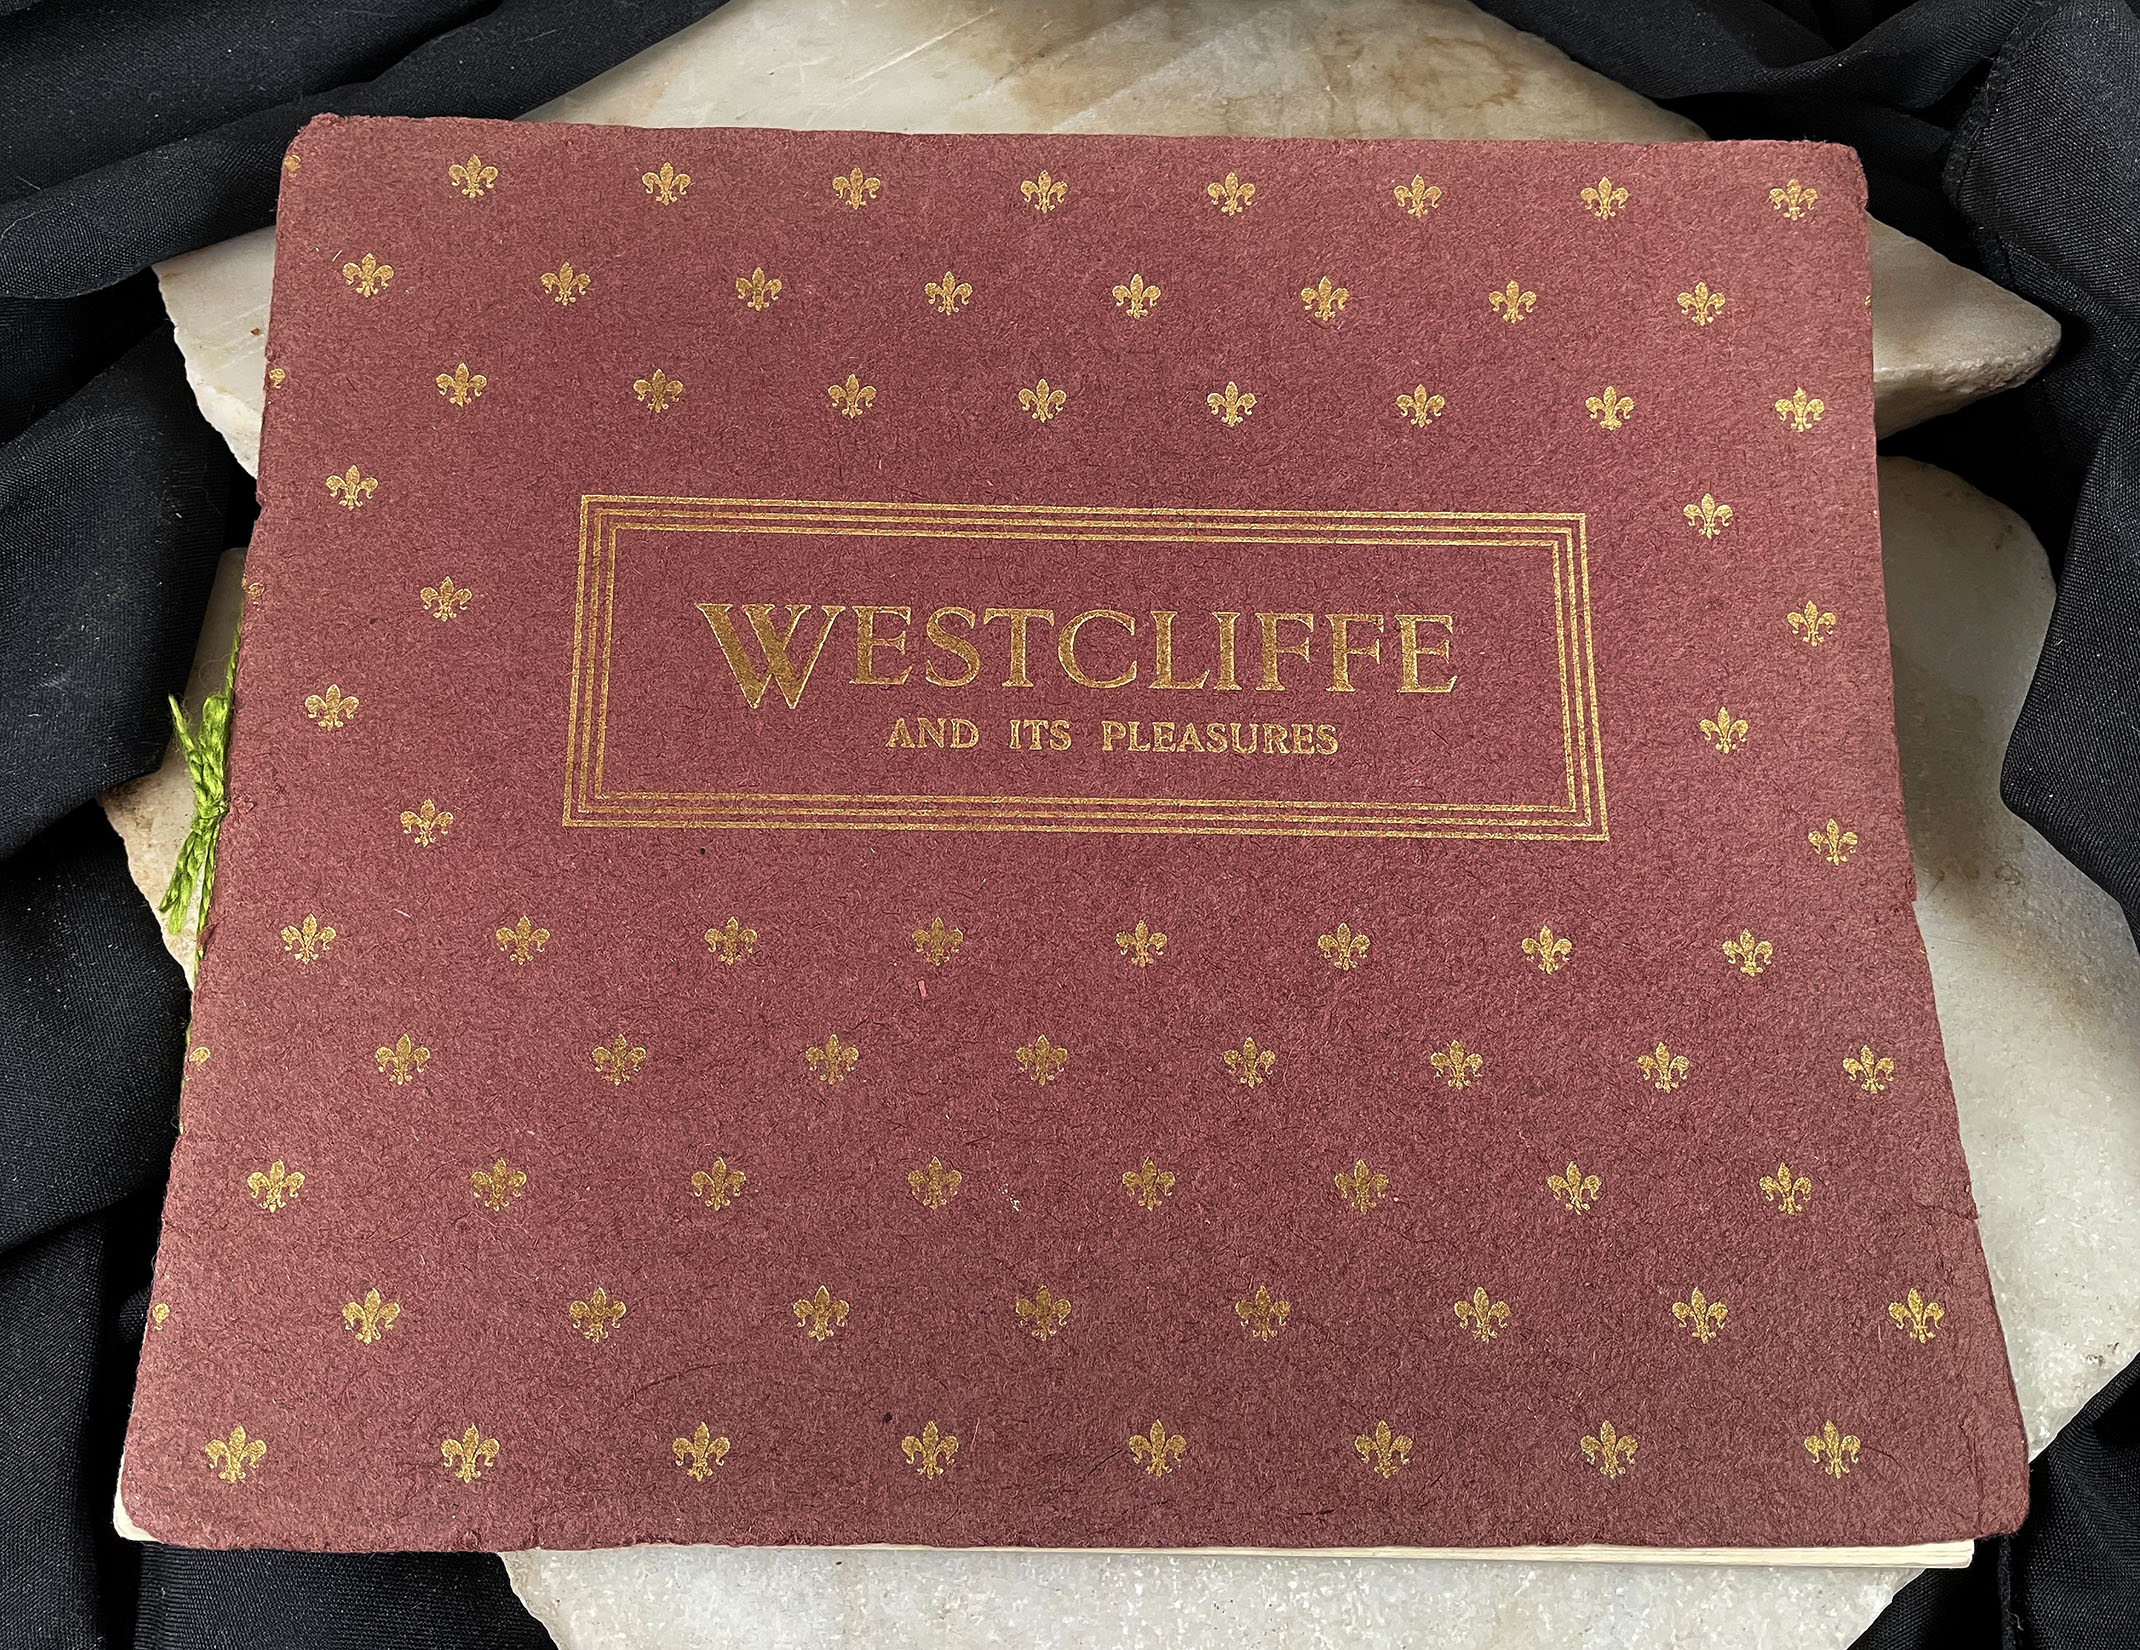 WESTCLIFFE, CUSTER COUNTY, COLORADO by W. O. Mieir, published 1898